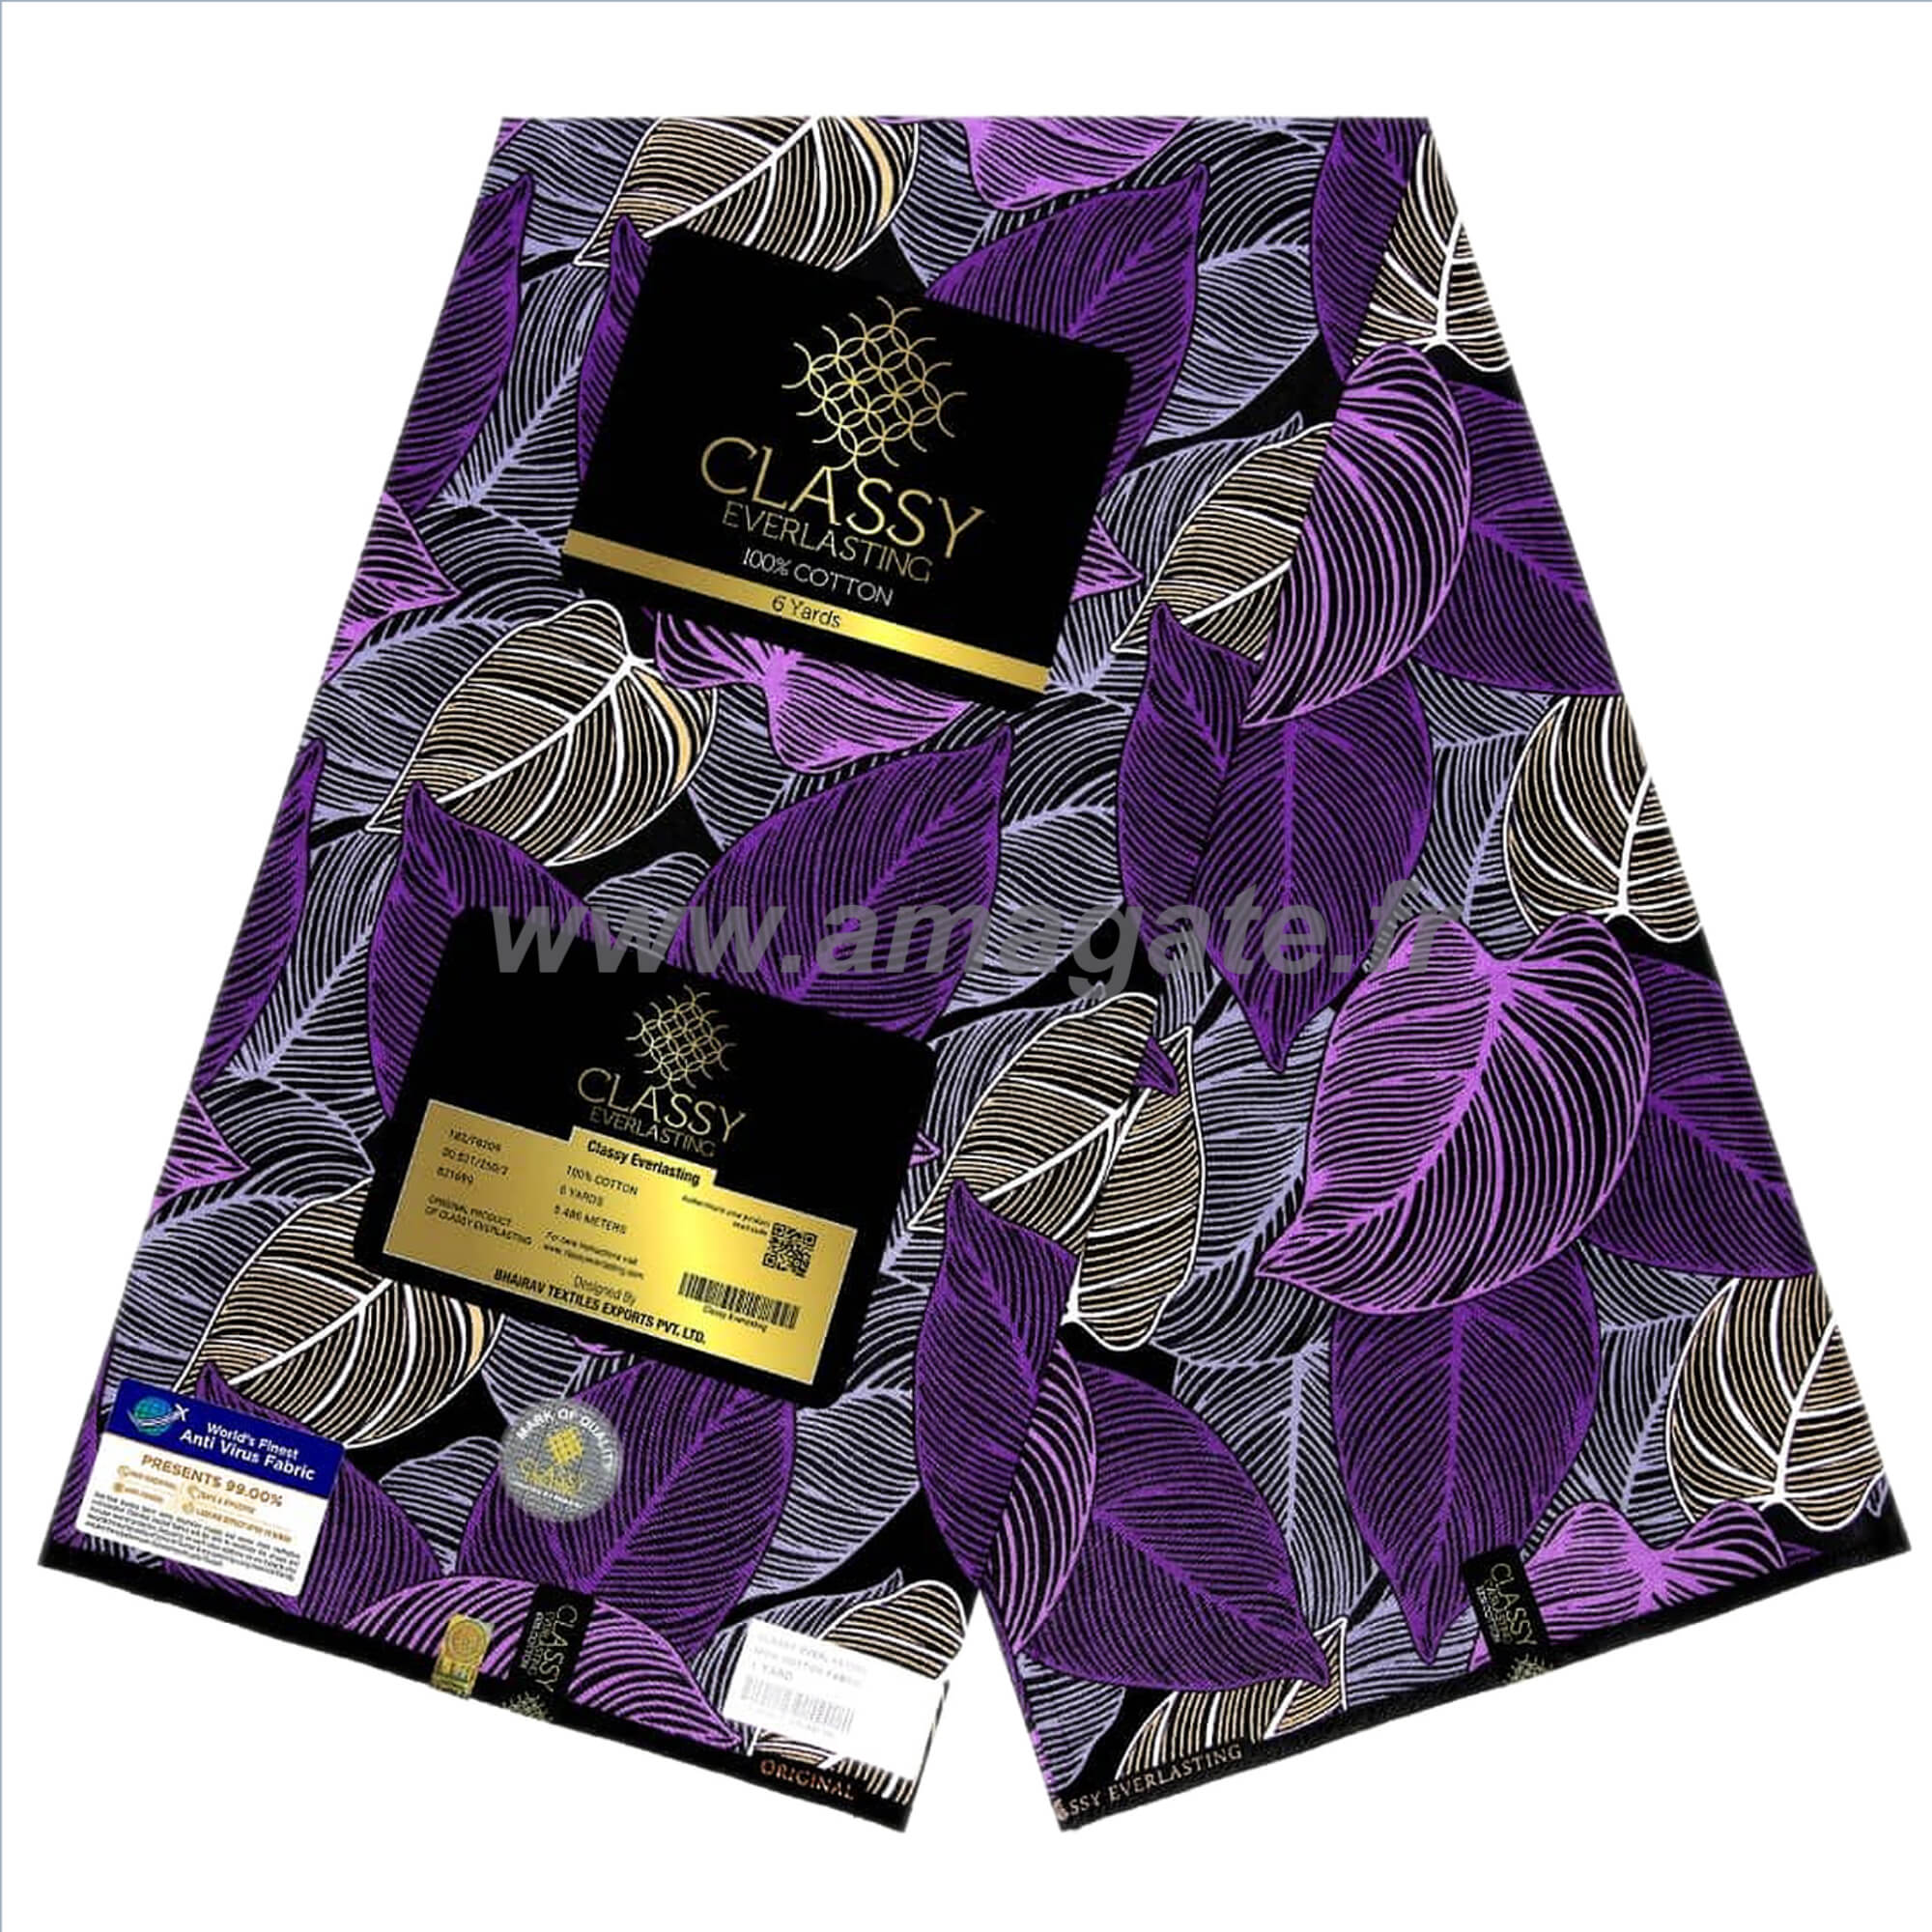 Tissu - Wax 100% coton - Feuilles - Violet / Rose / Brun